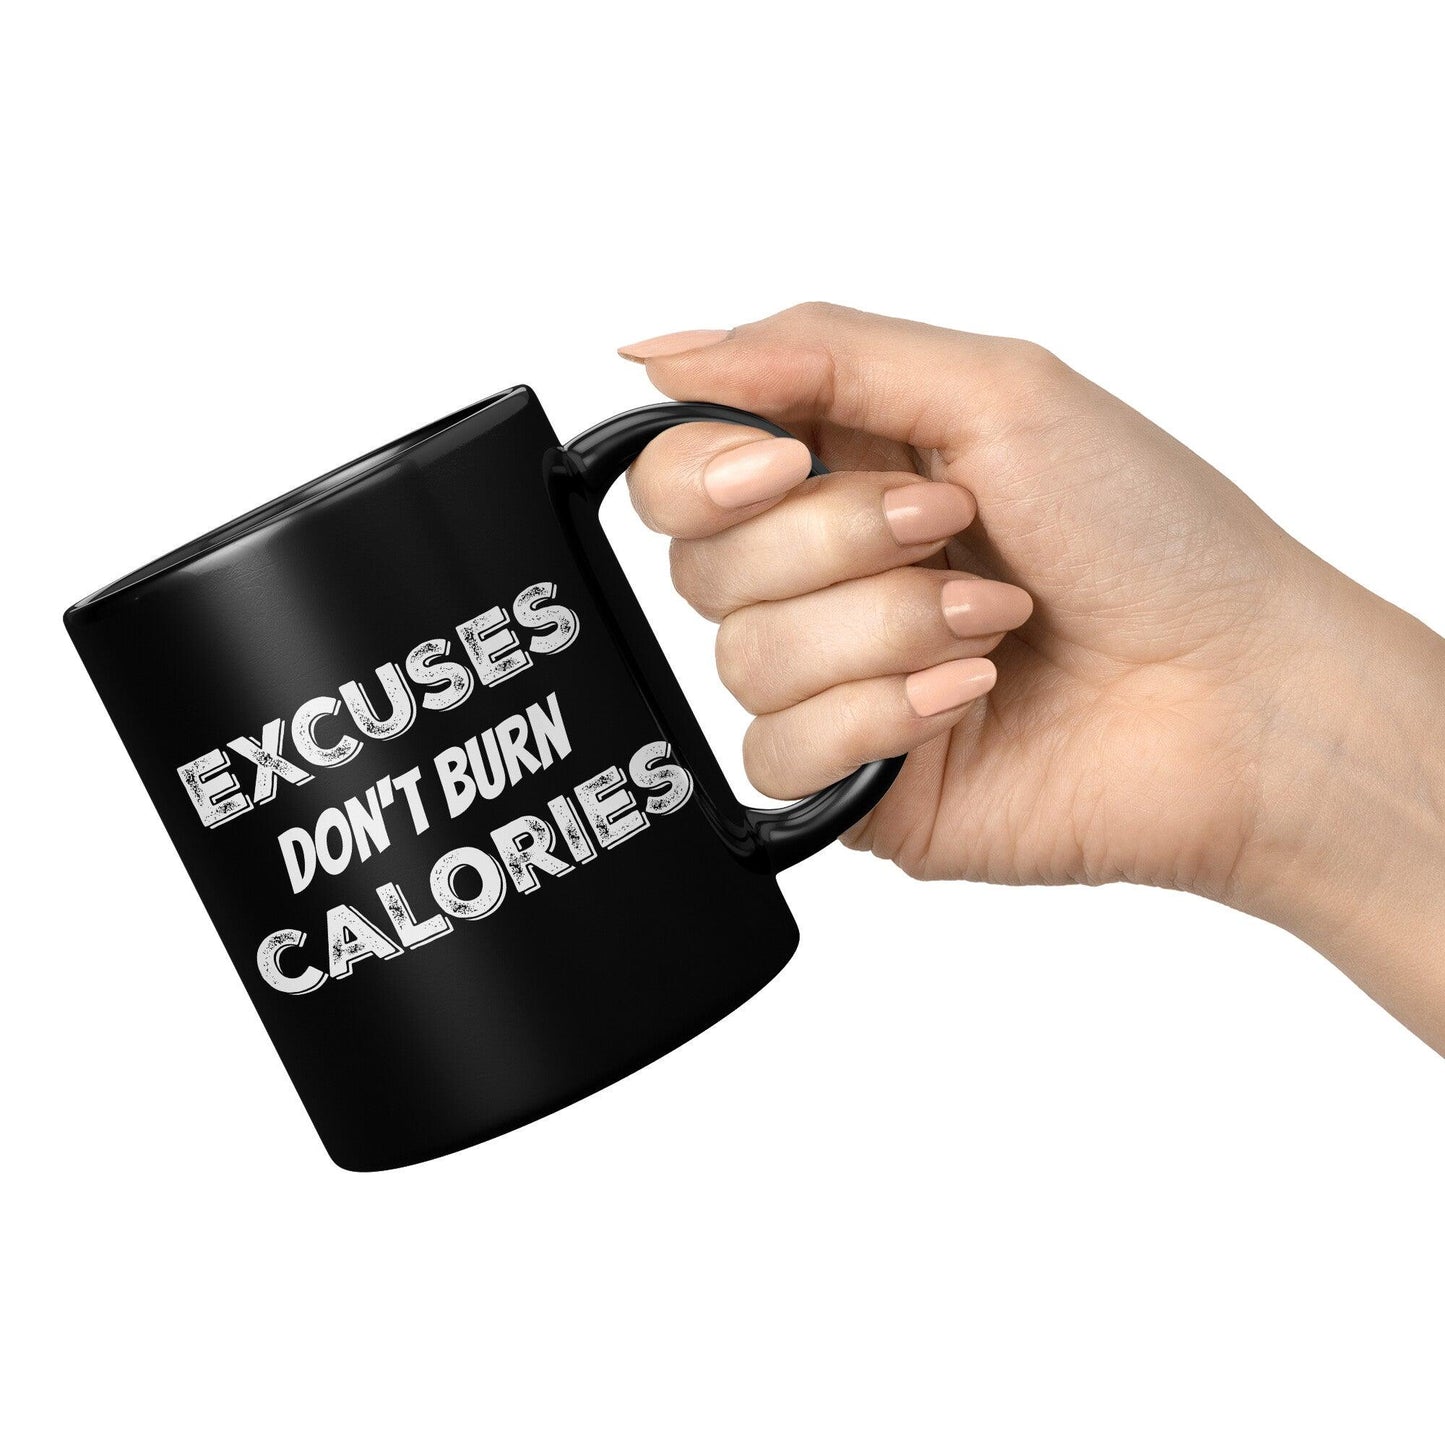 Excuses Don't Burn Calories Black Mug - TheGivenGet